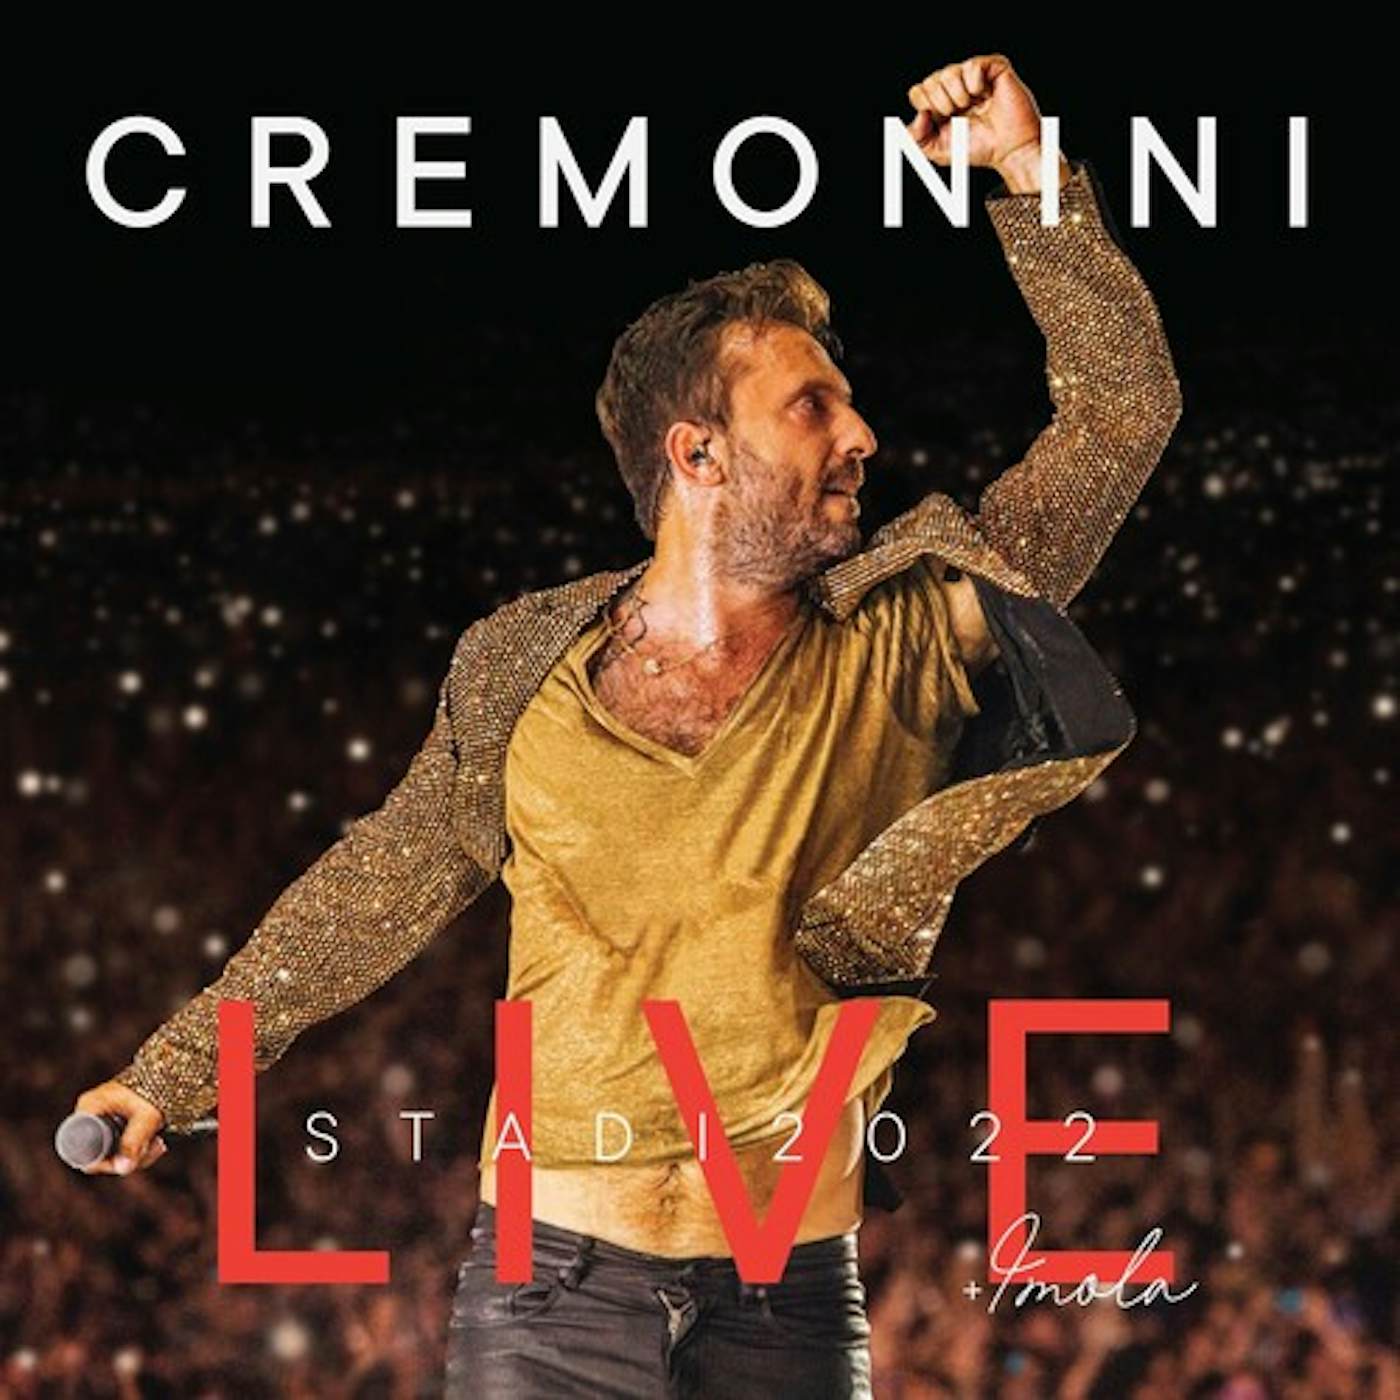 Cesare Cremonini CREMONINI LIVE: STADI 2022 + IMOLA CD